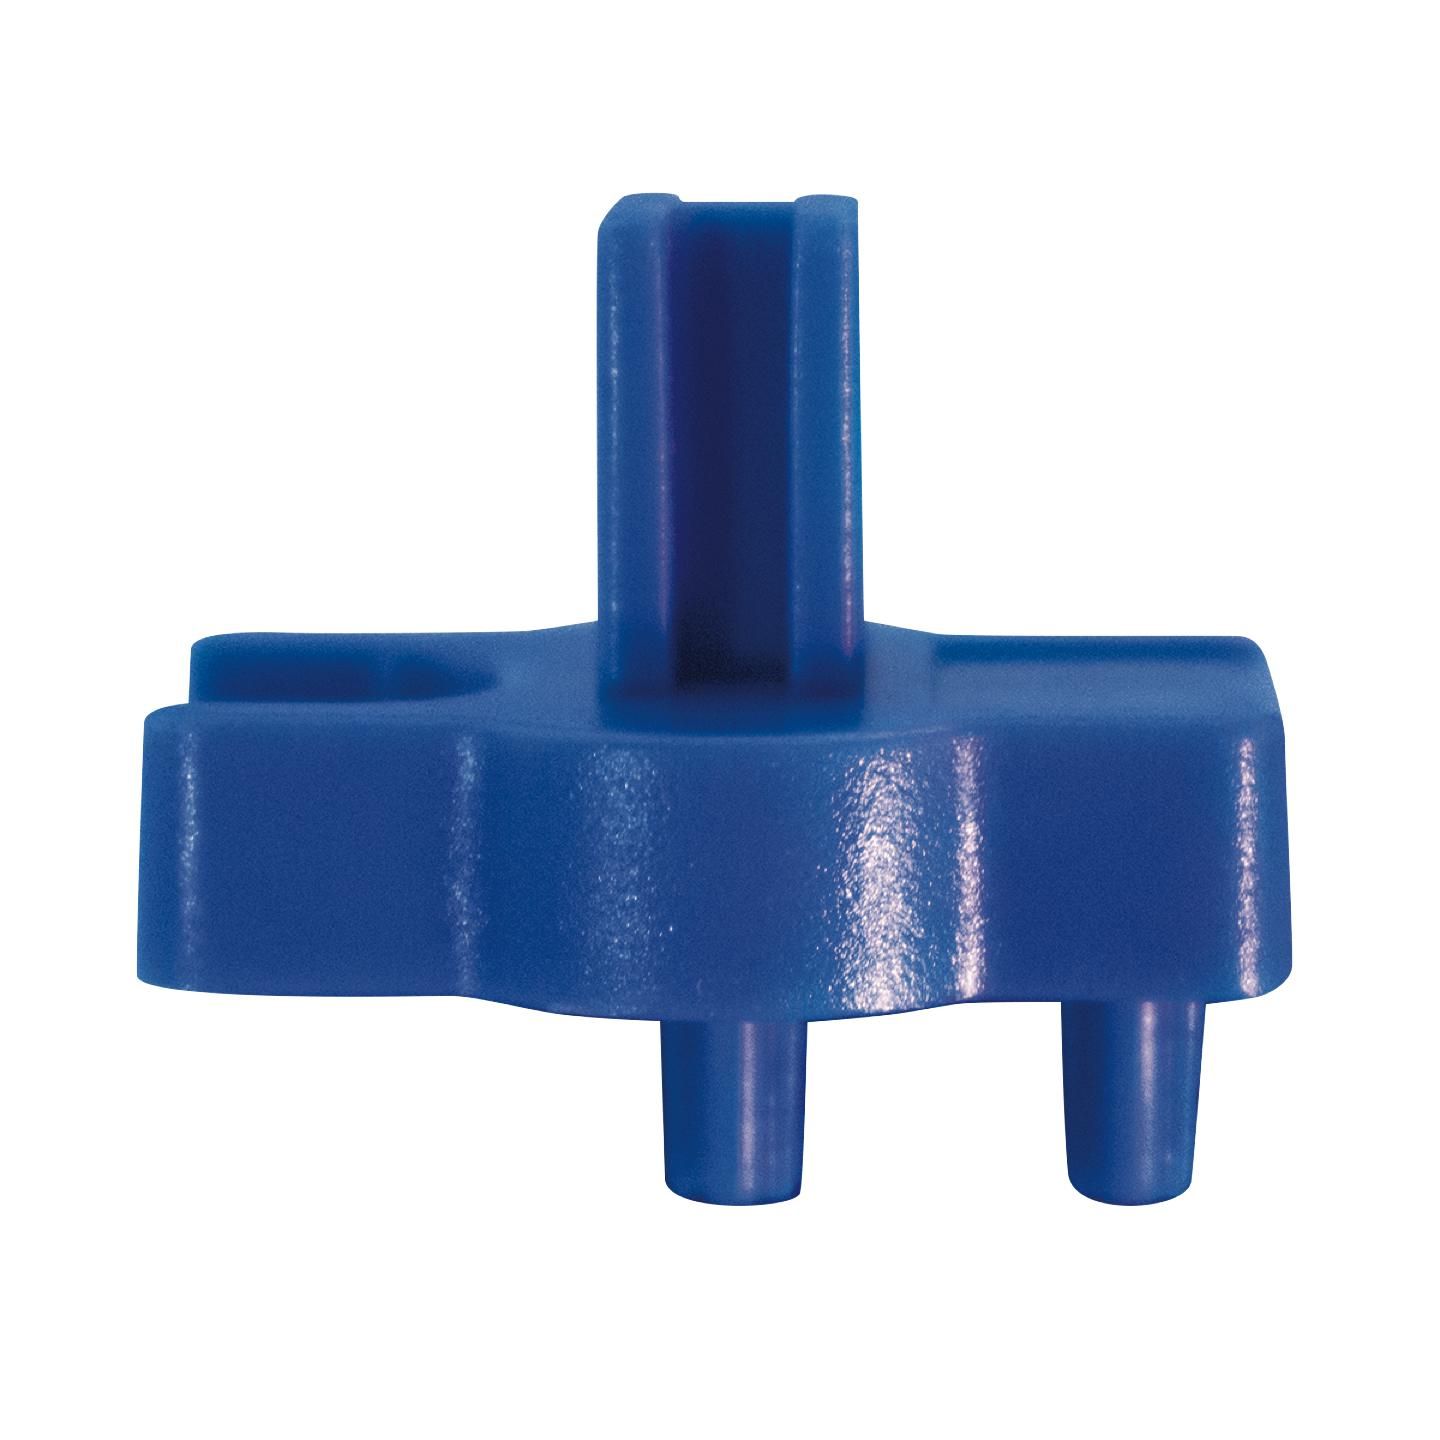 MTS51006 - Toolgrid™ 1/4" Socket Holder, Blue (25-Piece)